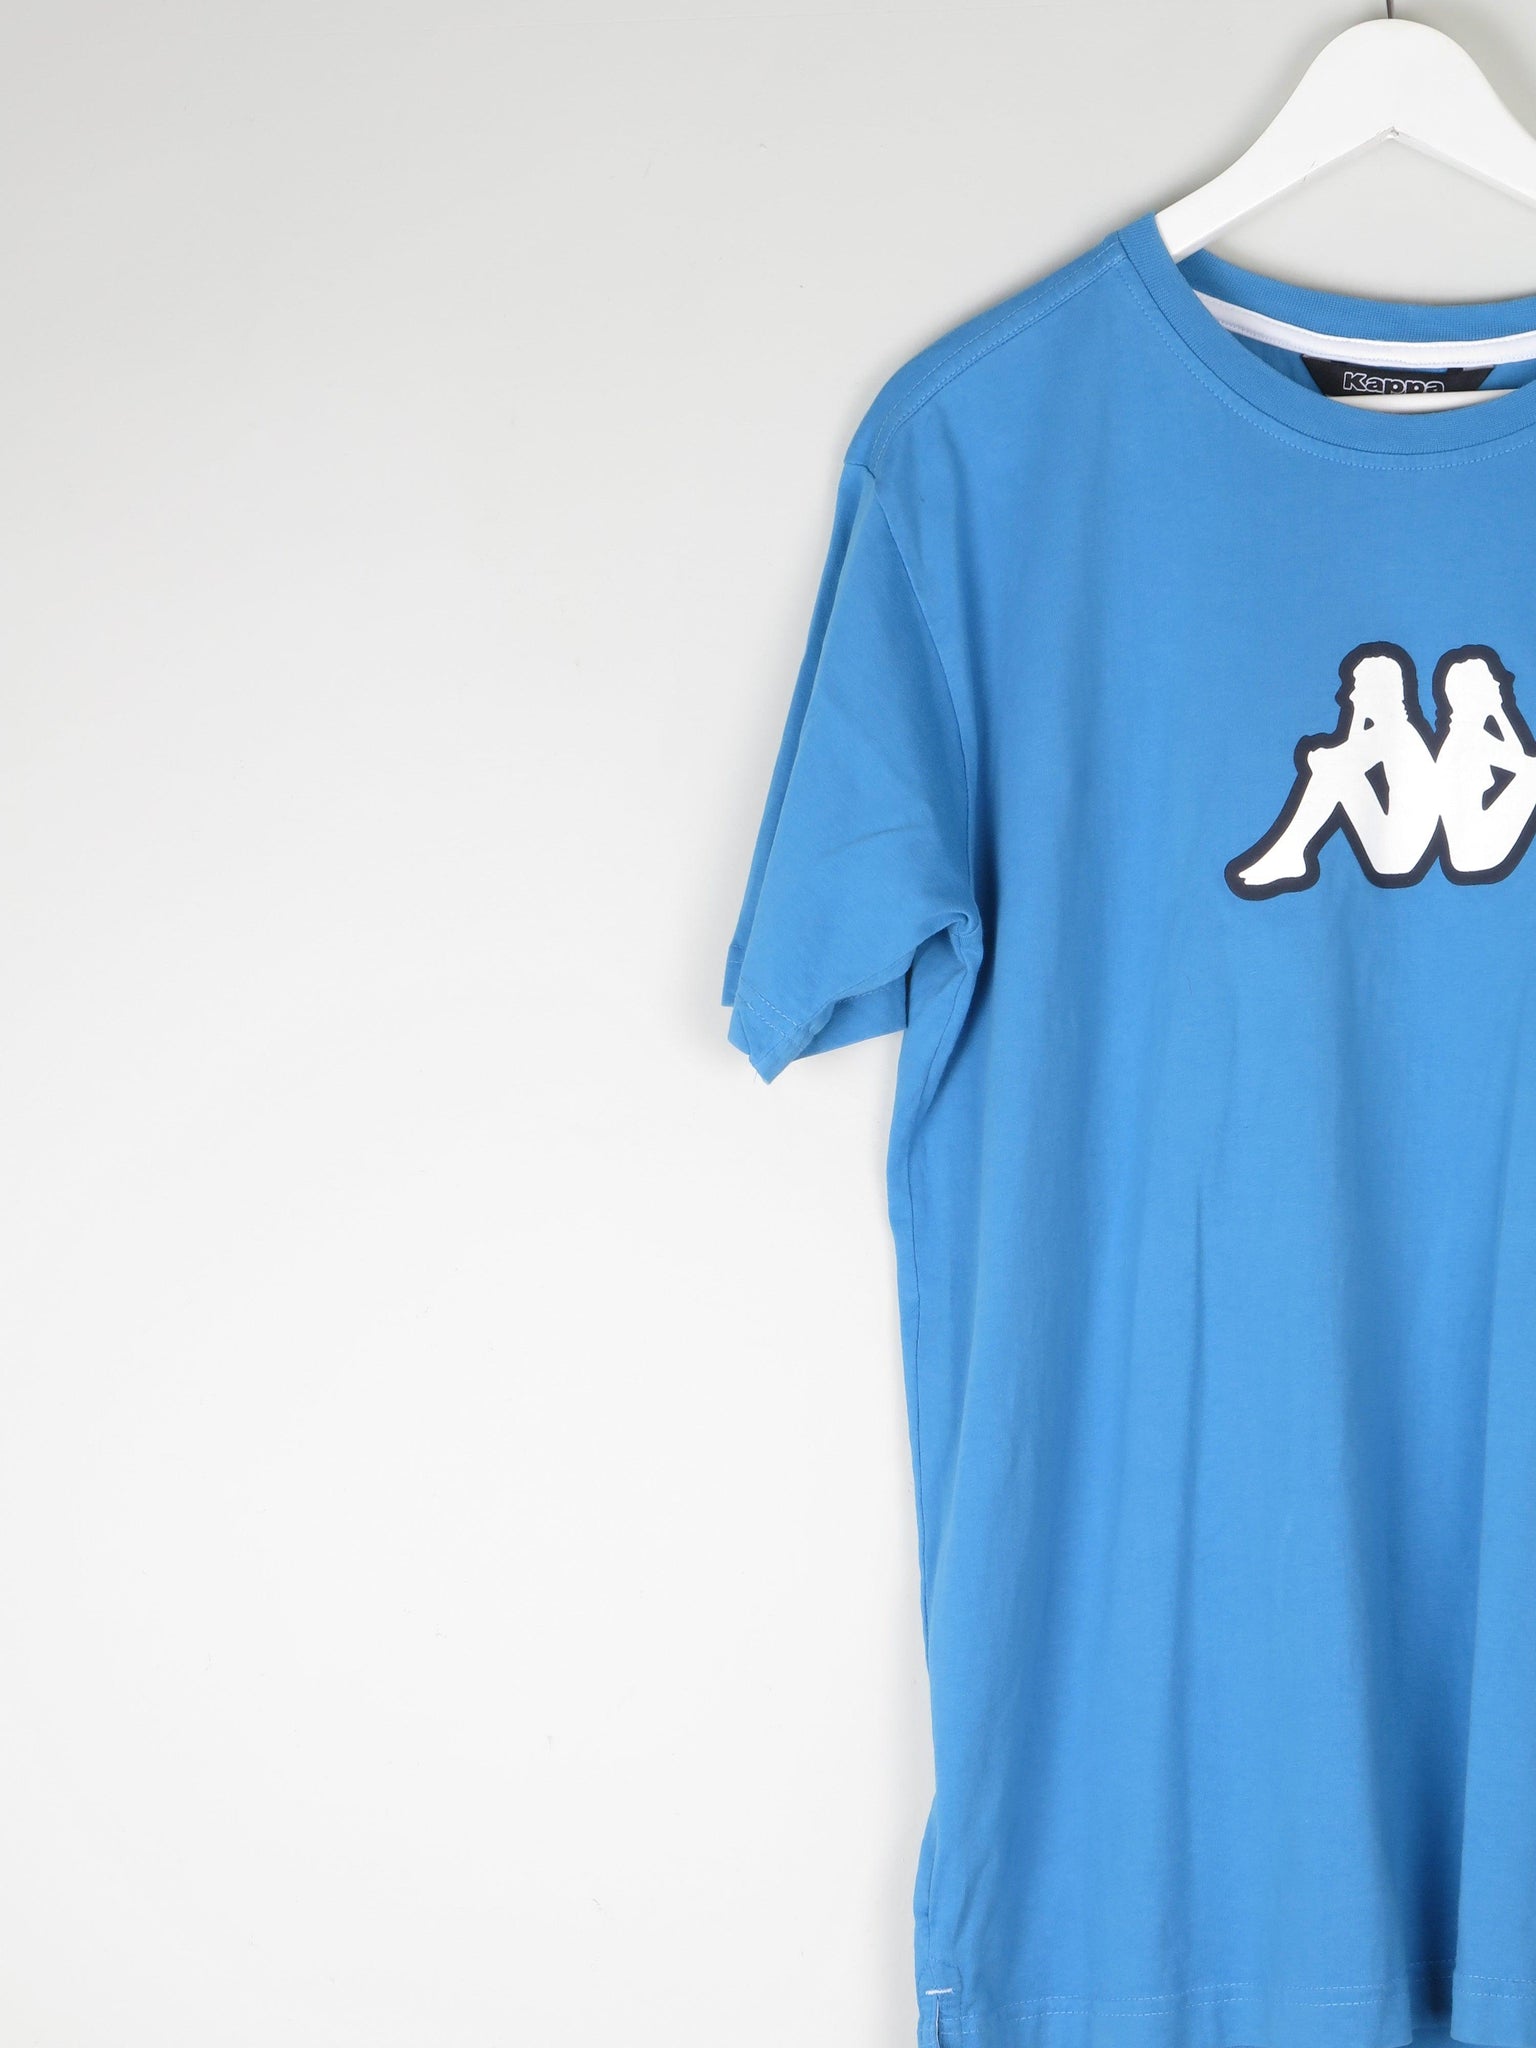 Men’s Blue Kappa T-shirt XL - The Harlequin